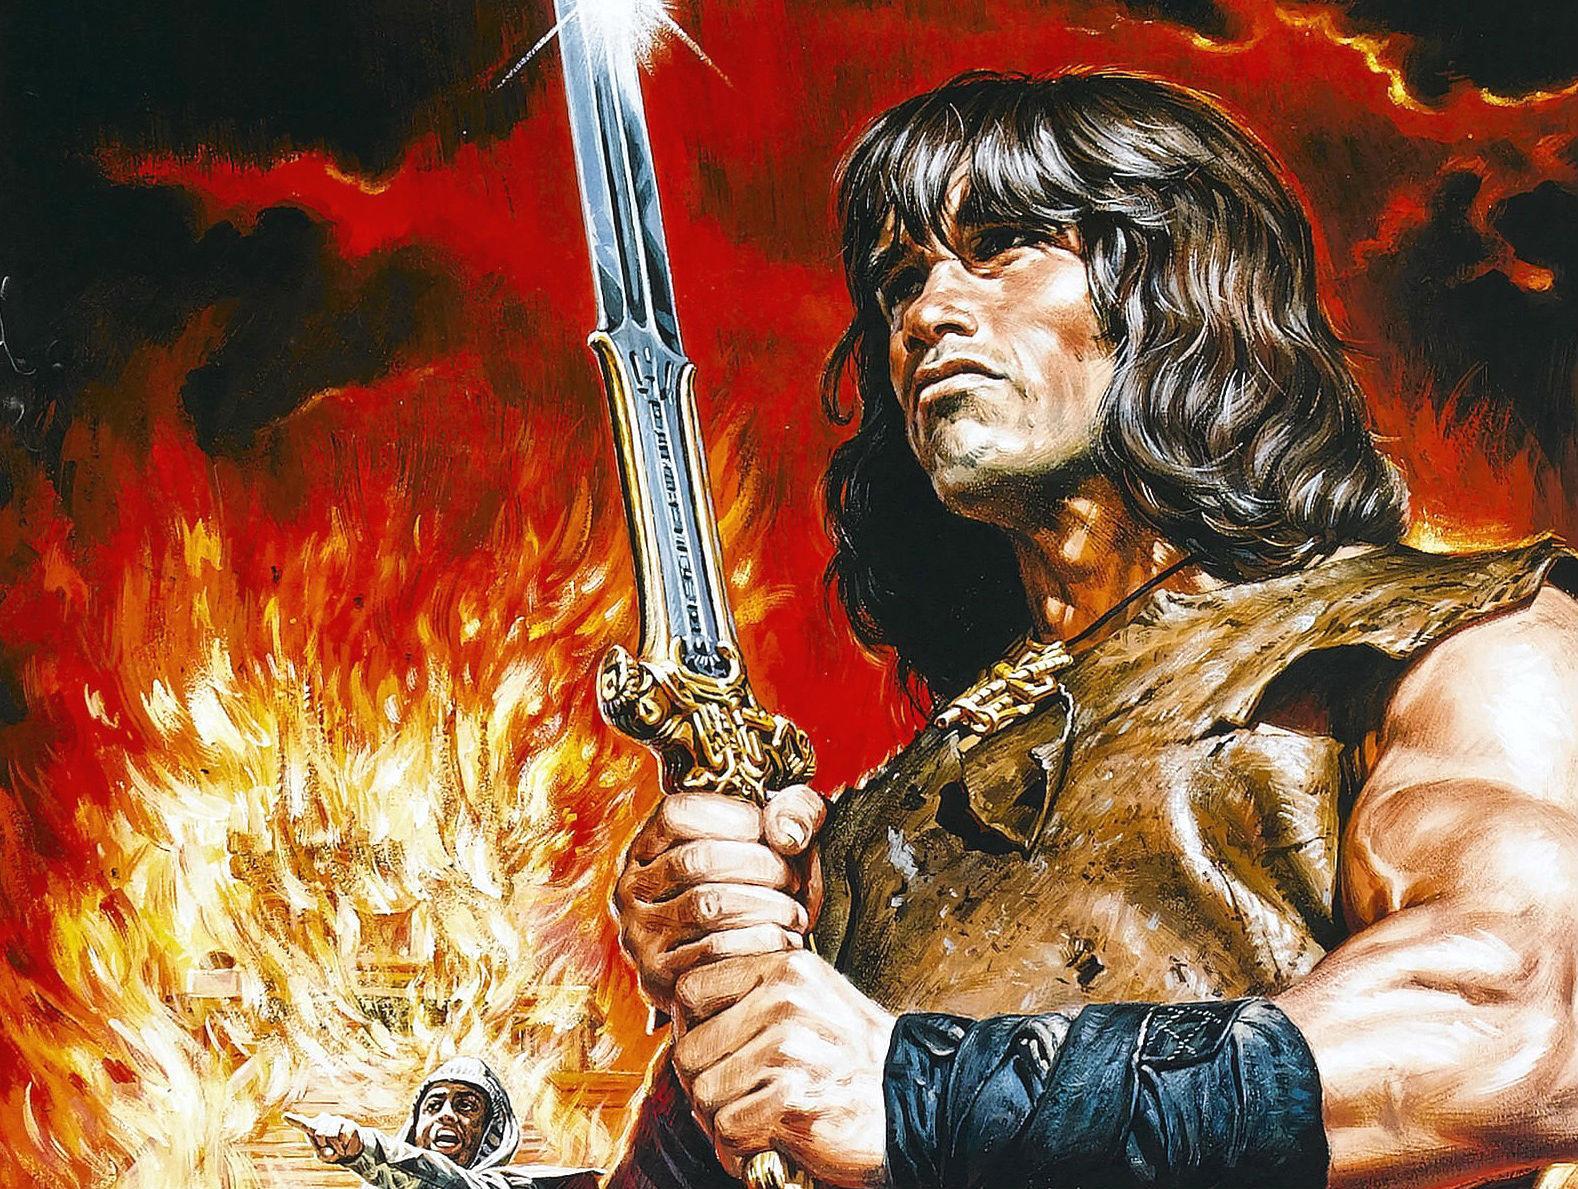 Conan The Barbarian (1982) Wallpaper HD Download